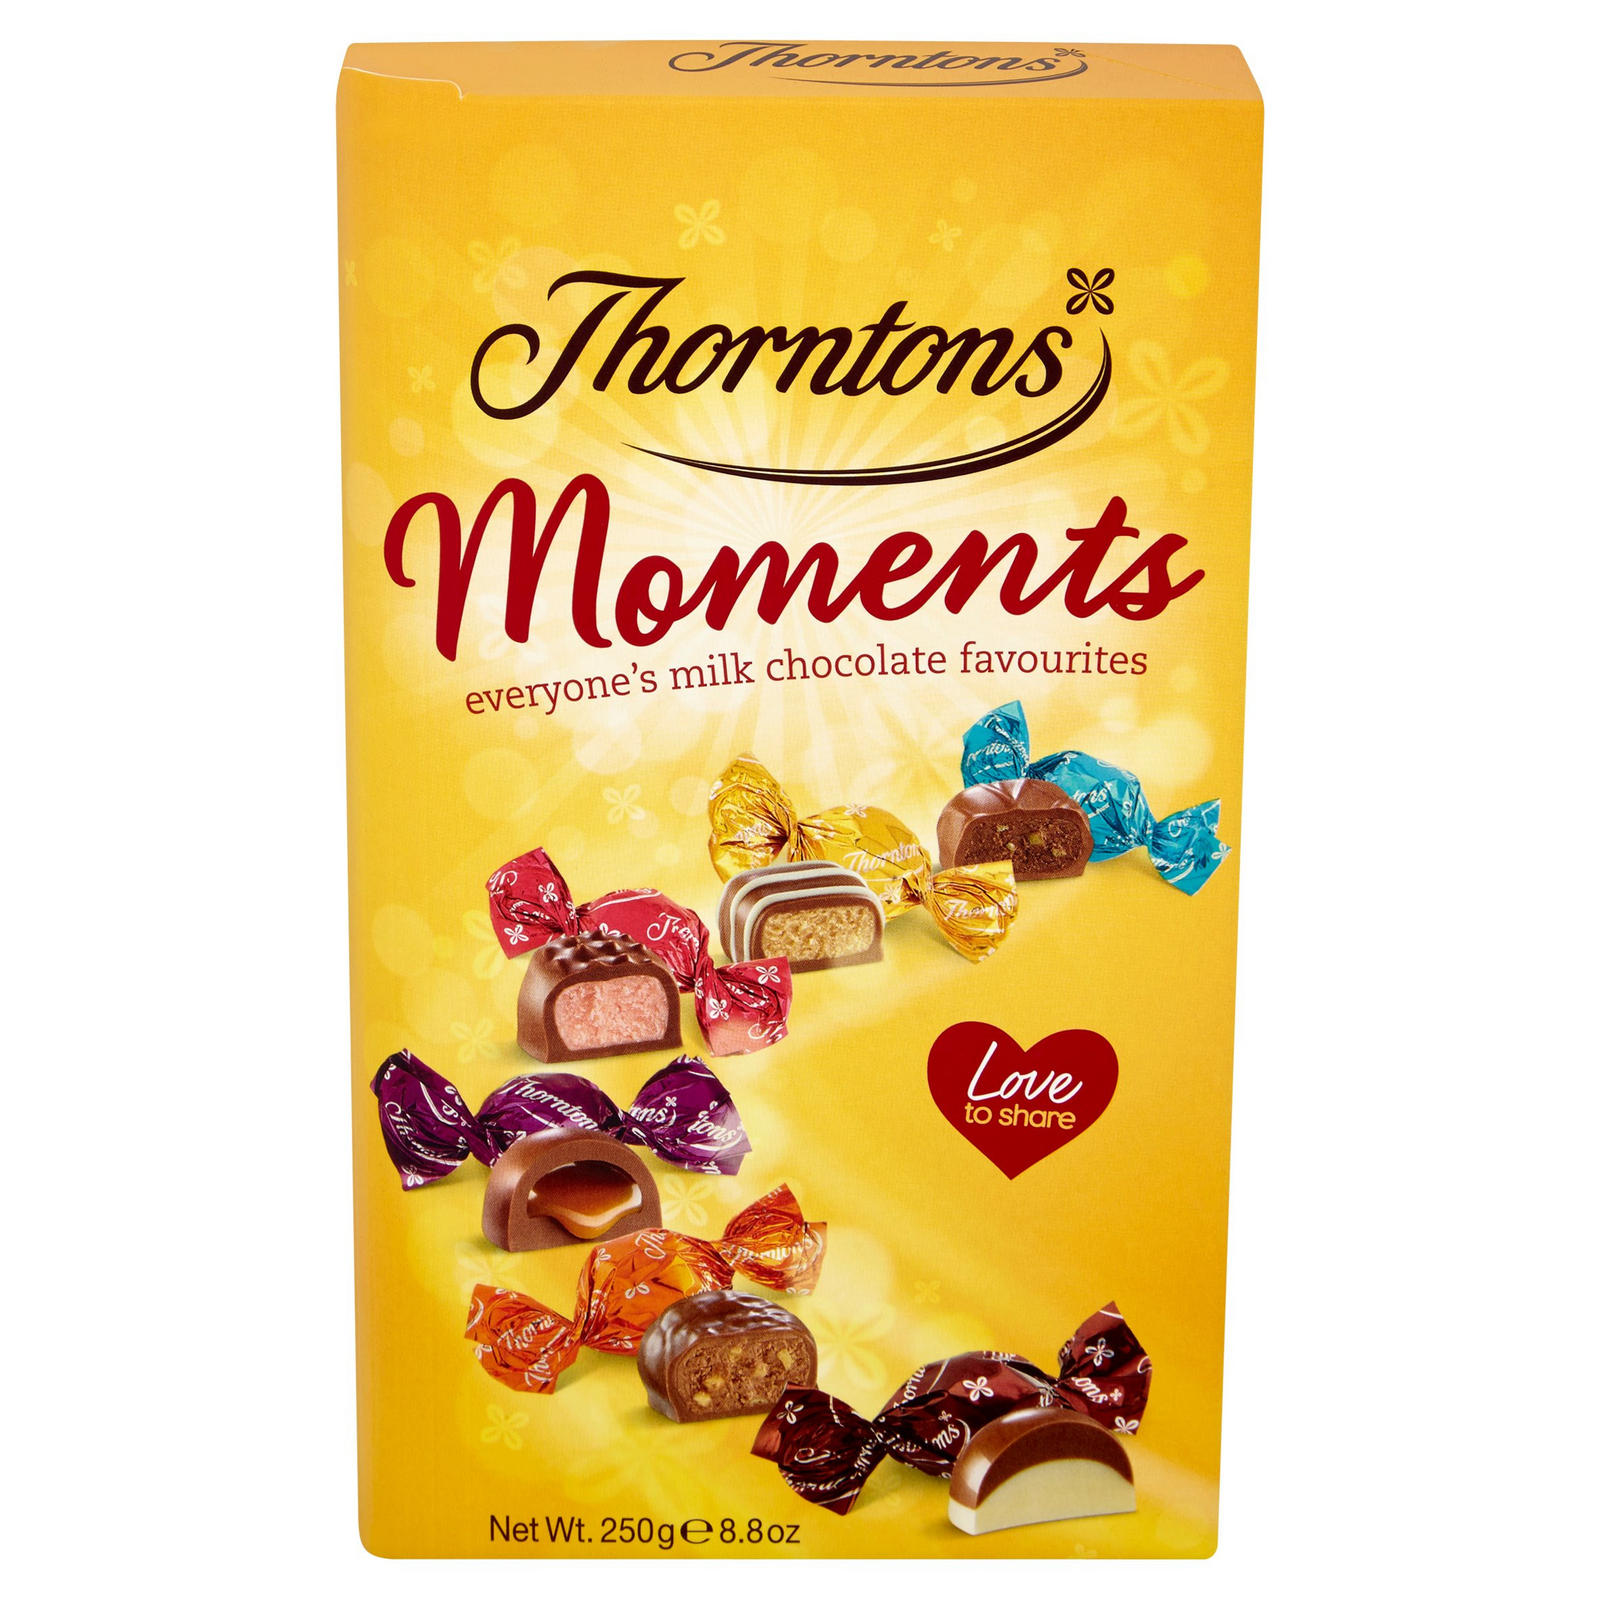 Thorntons chocolate box